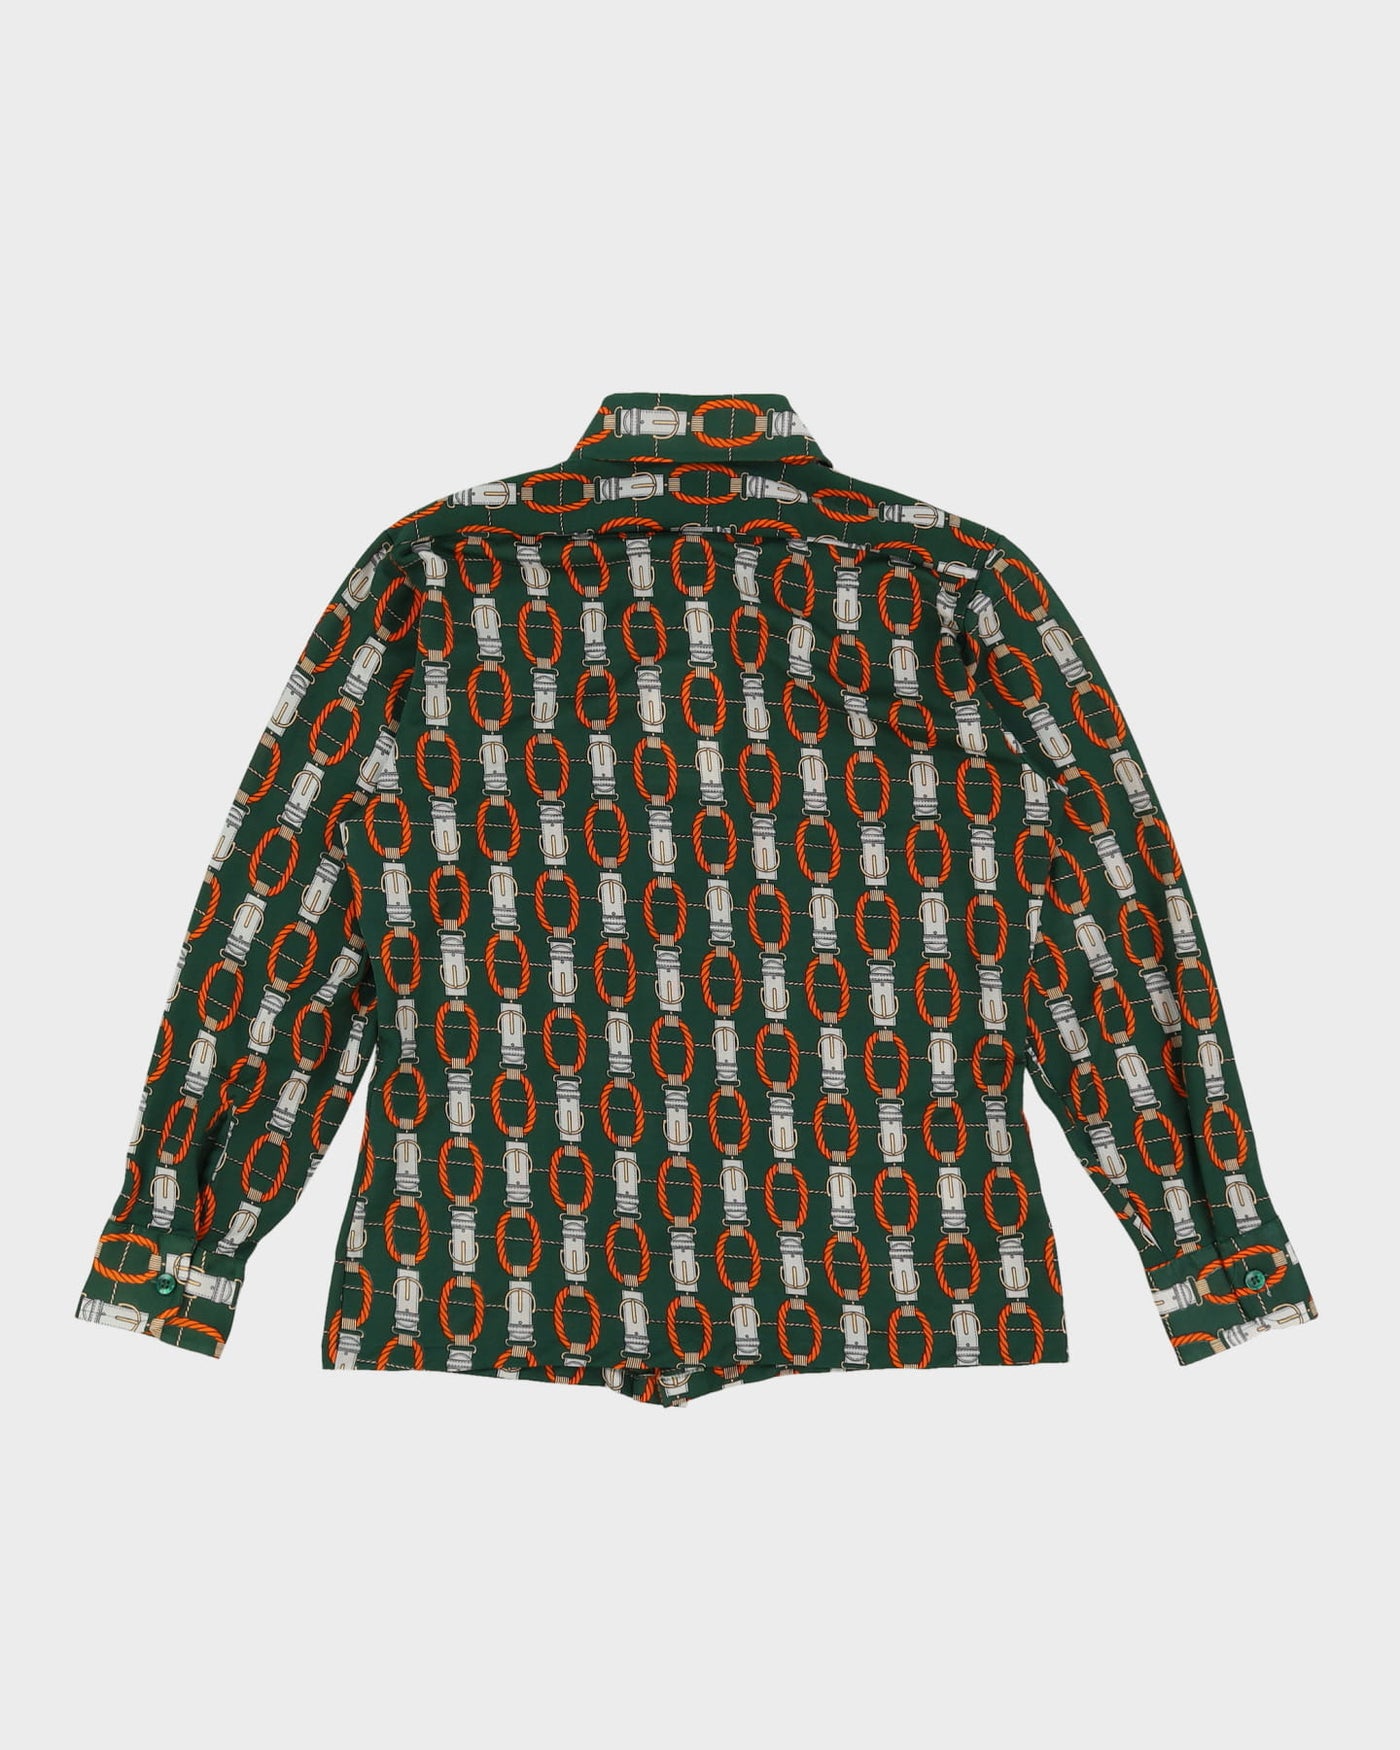 Vintage 70s Green Belt Pattern Shirt - M